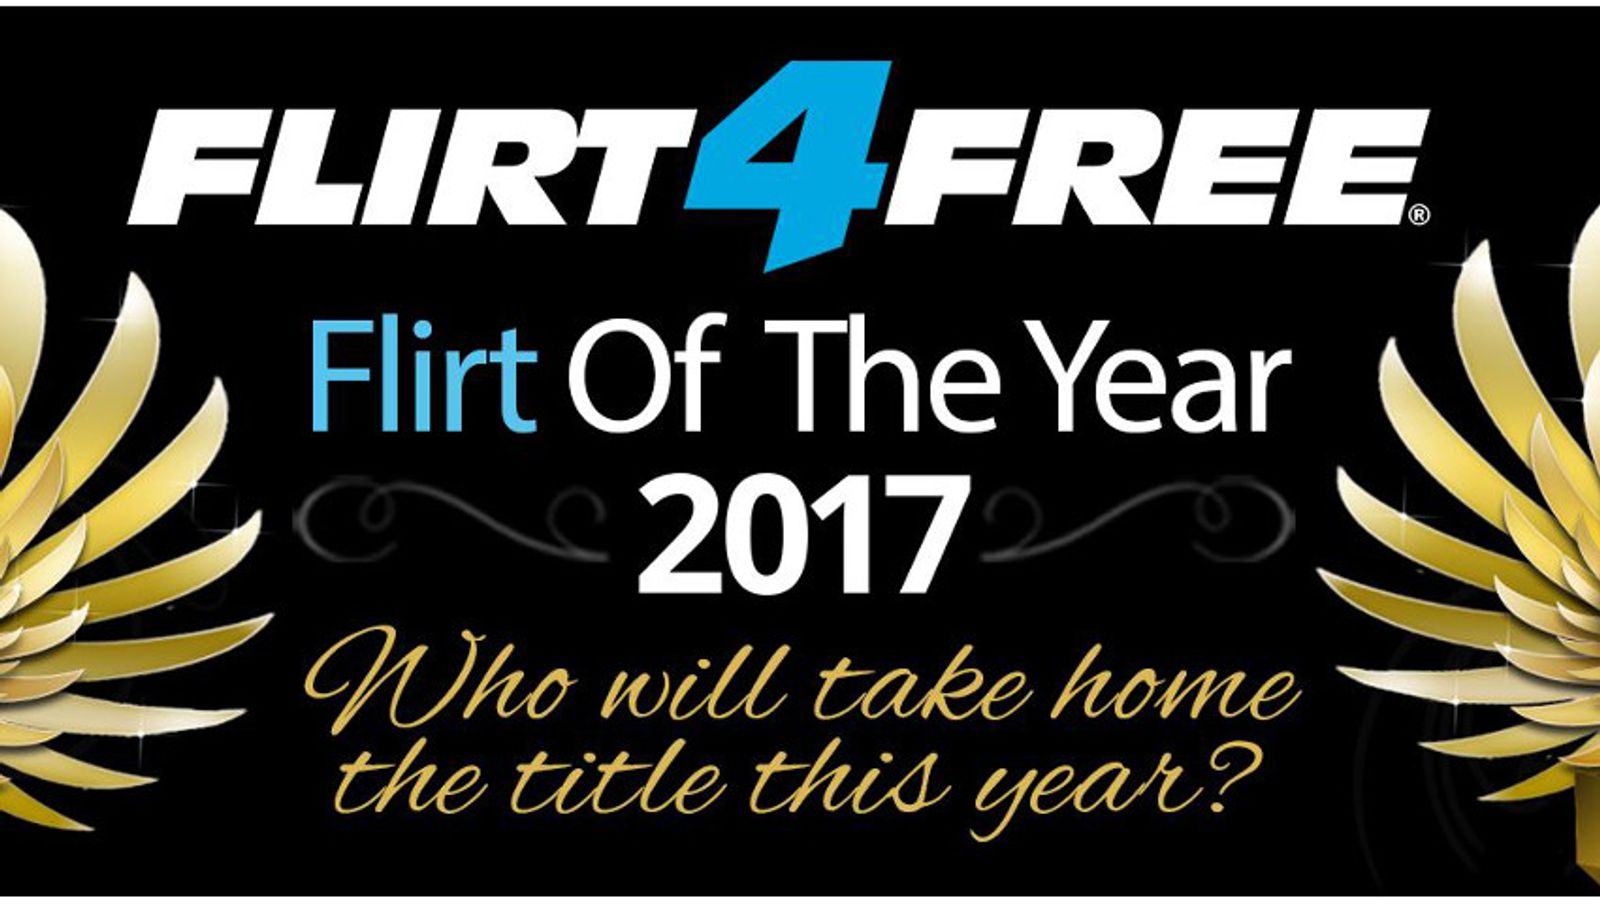 Flirt4Free Announces 'Flirt of the Year' Contest Details